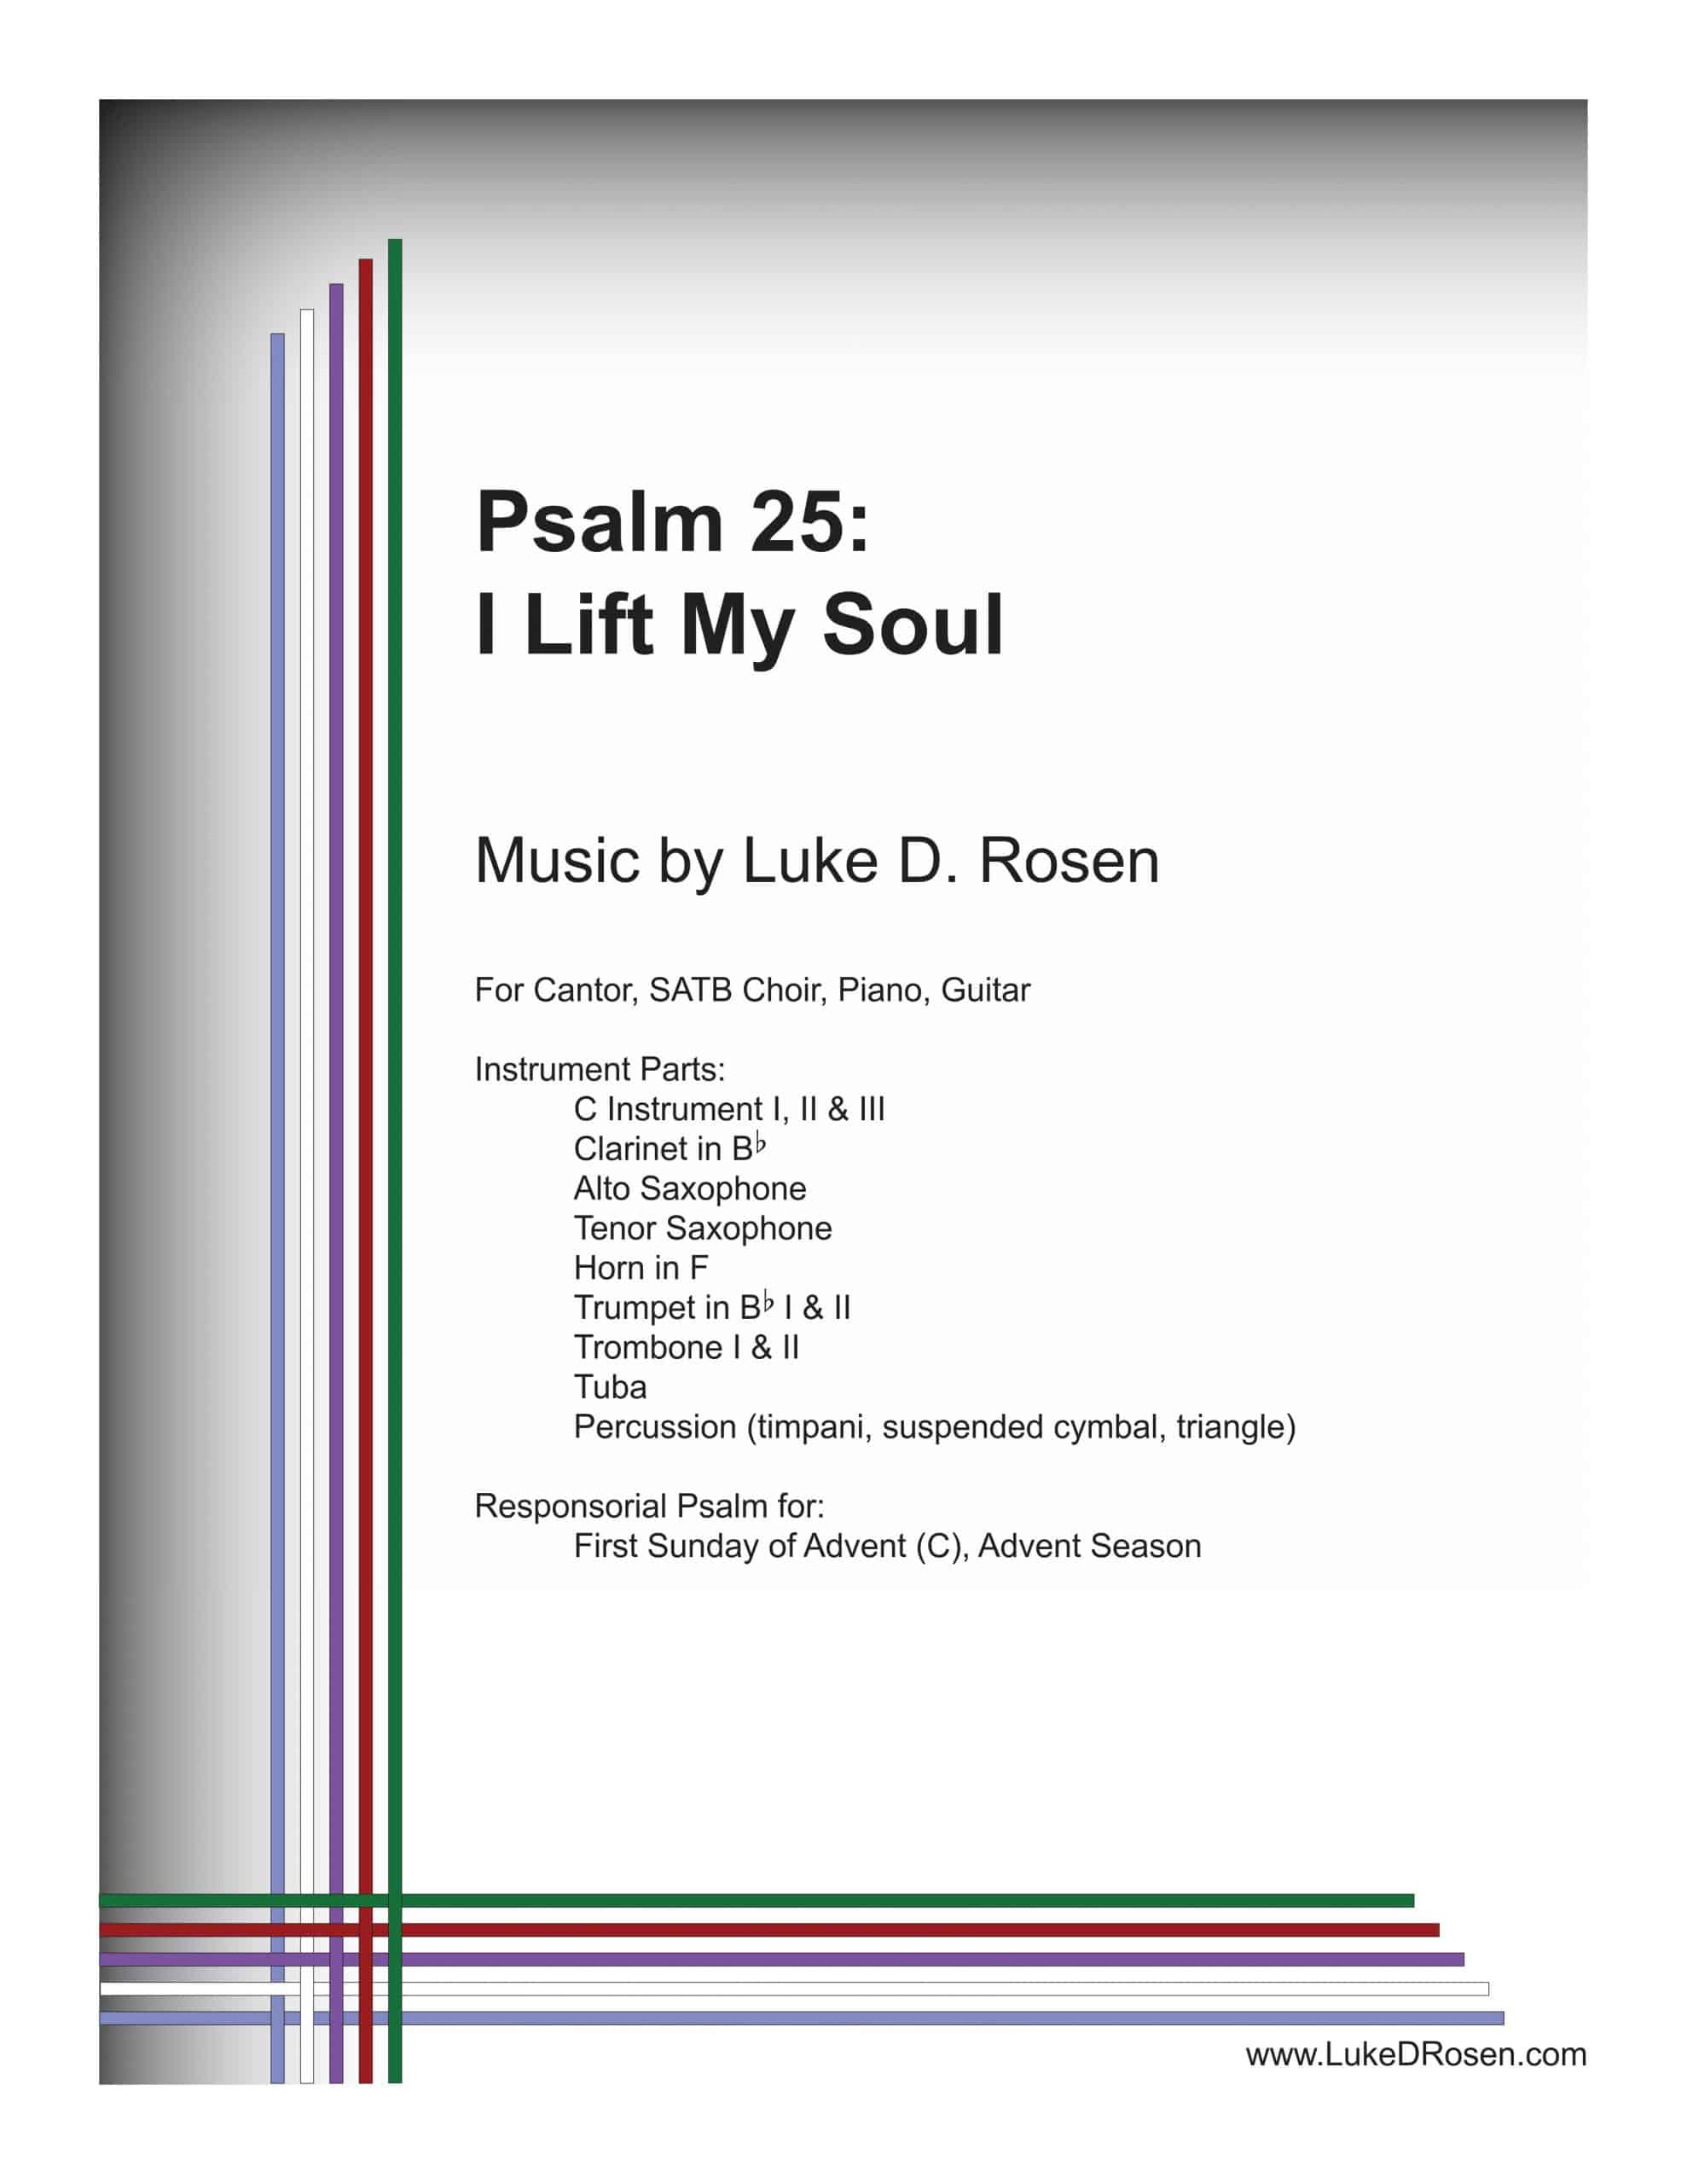 Psalm 25 – I Lift My Soul (Rosen)